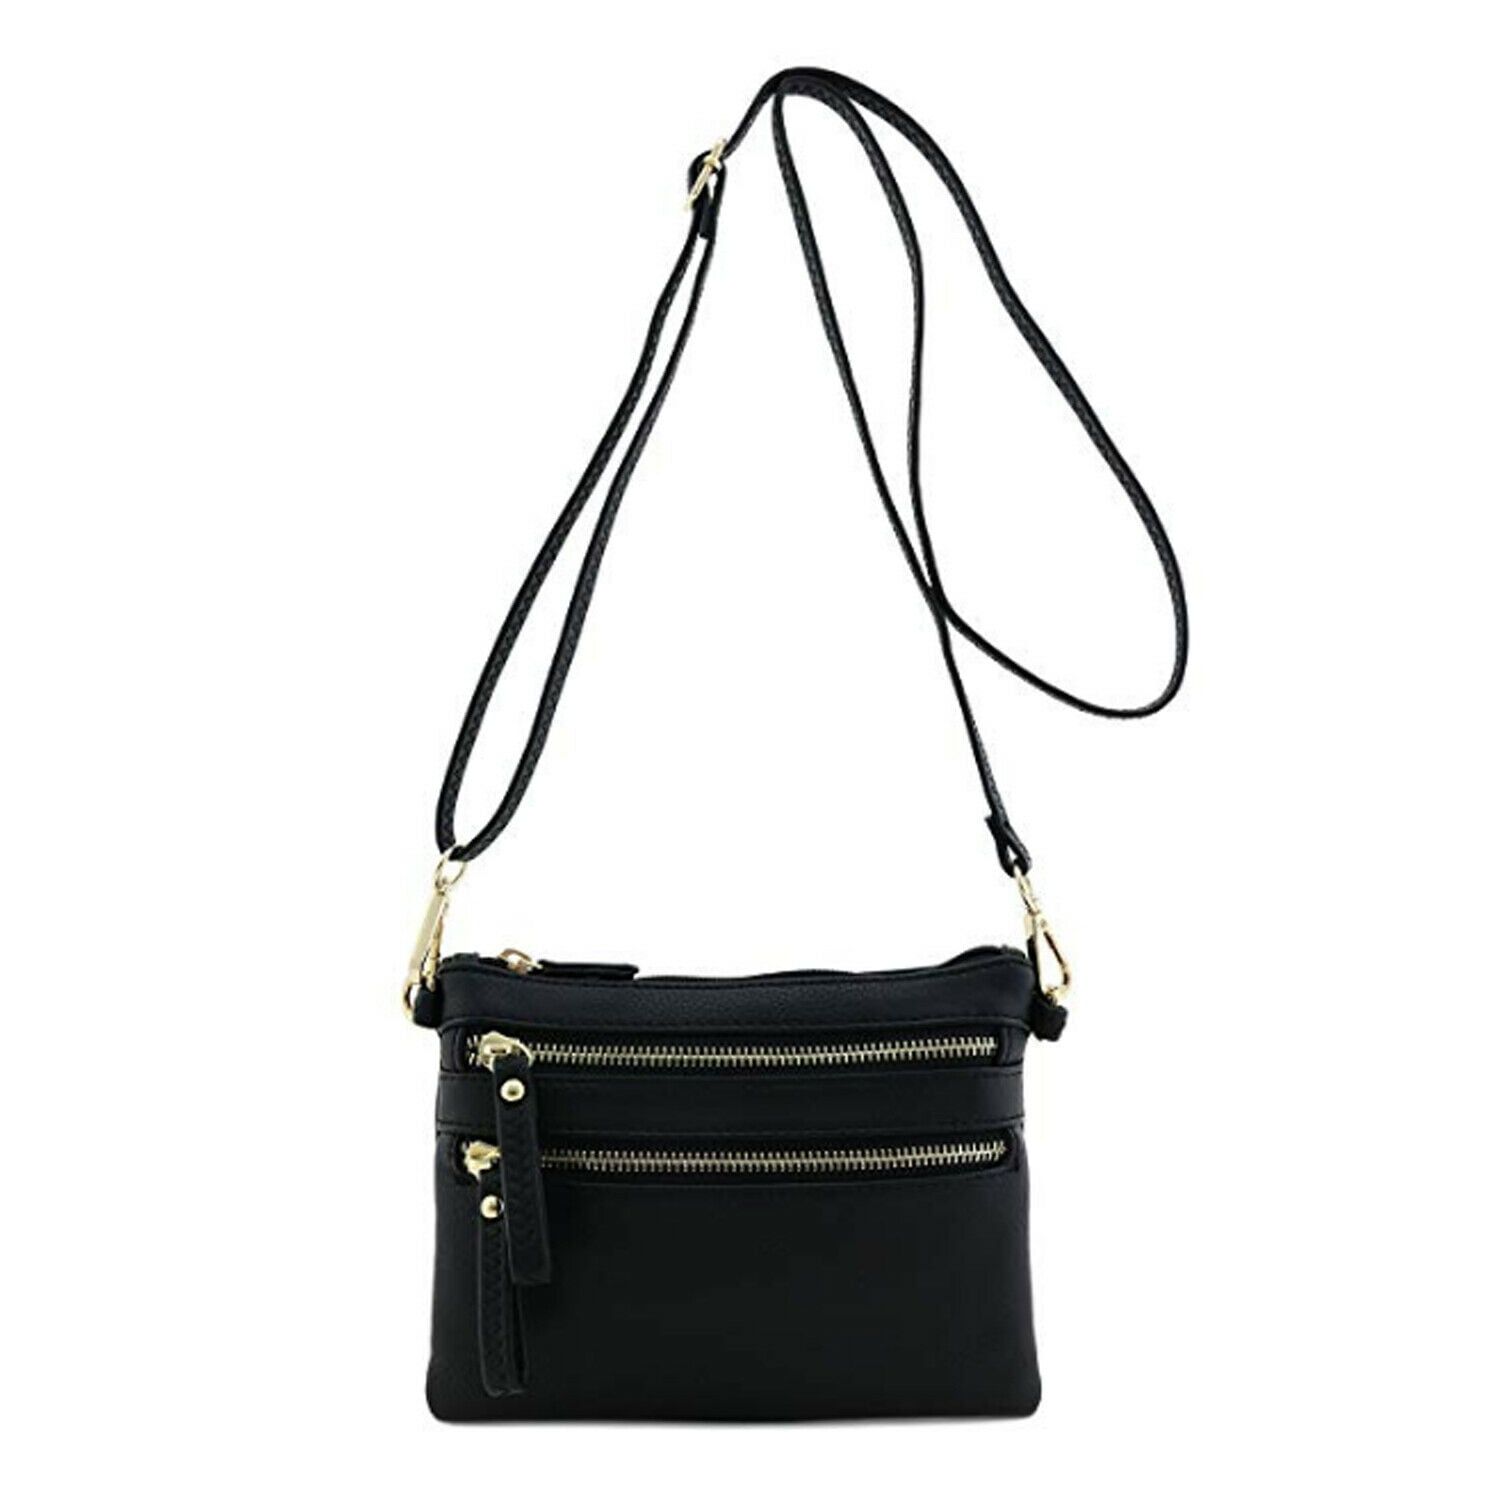 1pcs kurom PU zip handbag shoulder bag Wrist bag Wristlet Pouch shopping bag